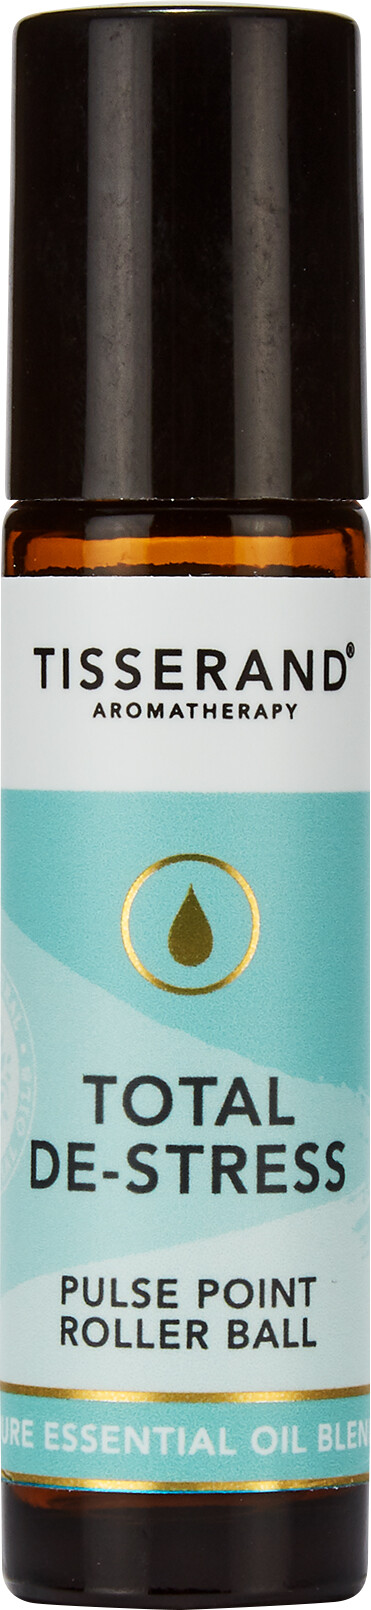 Tisserand Aromatherapy Total De-Stress Pulse Point Roller Ball 10ml